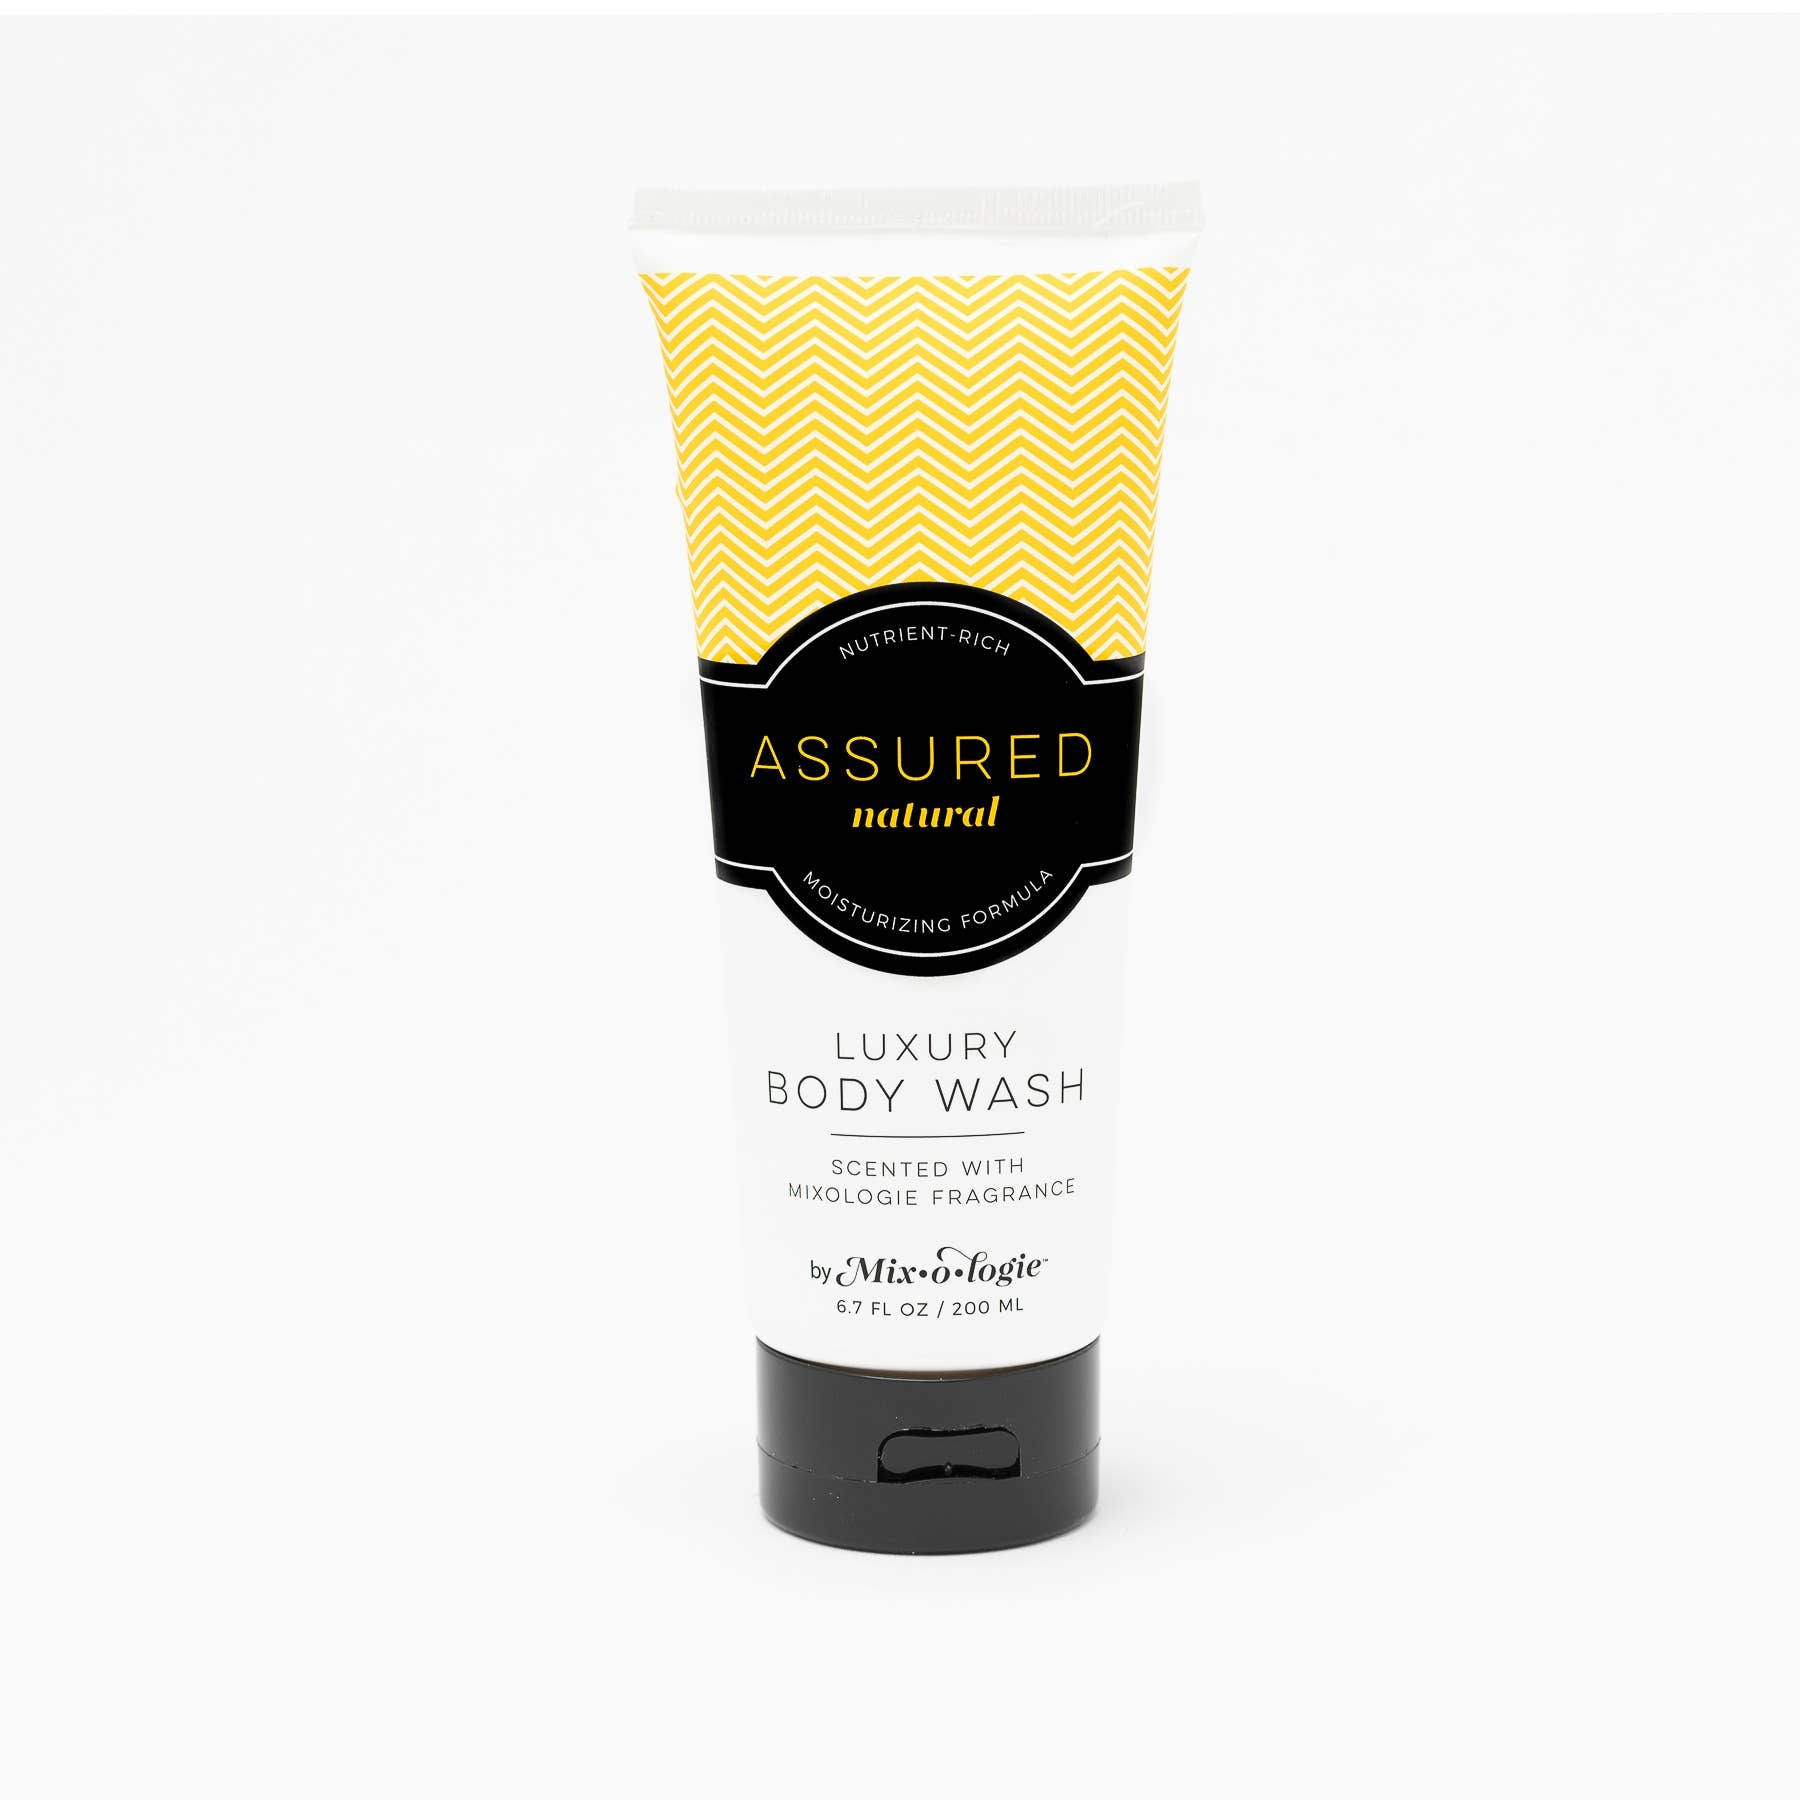 Luxury Body Wash / Shower Gel - Assured (natural) scent Core Mixologie